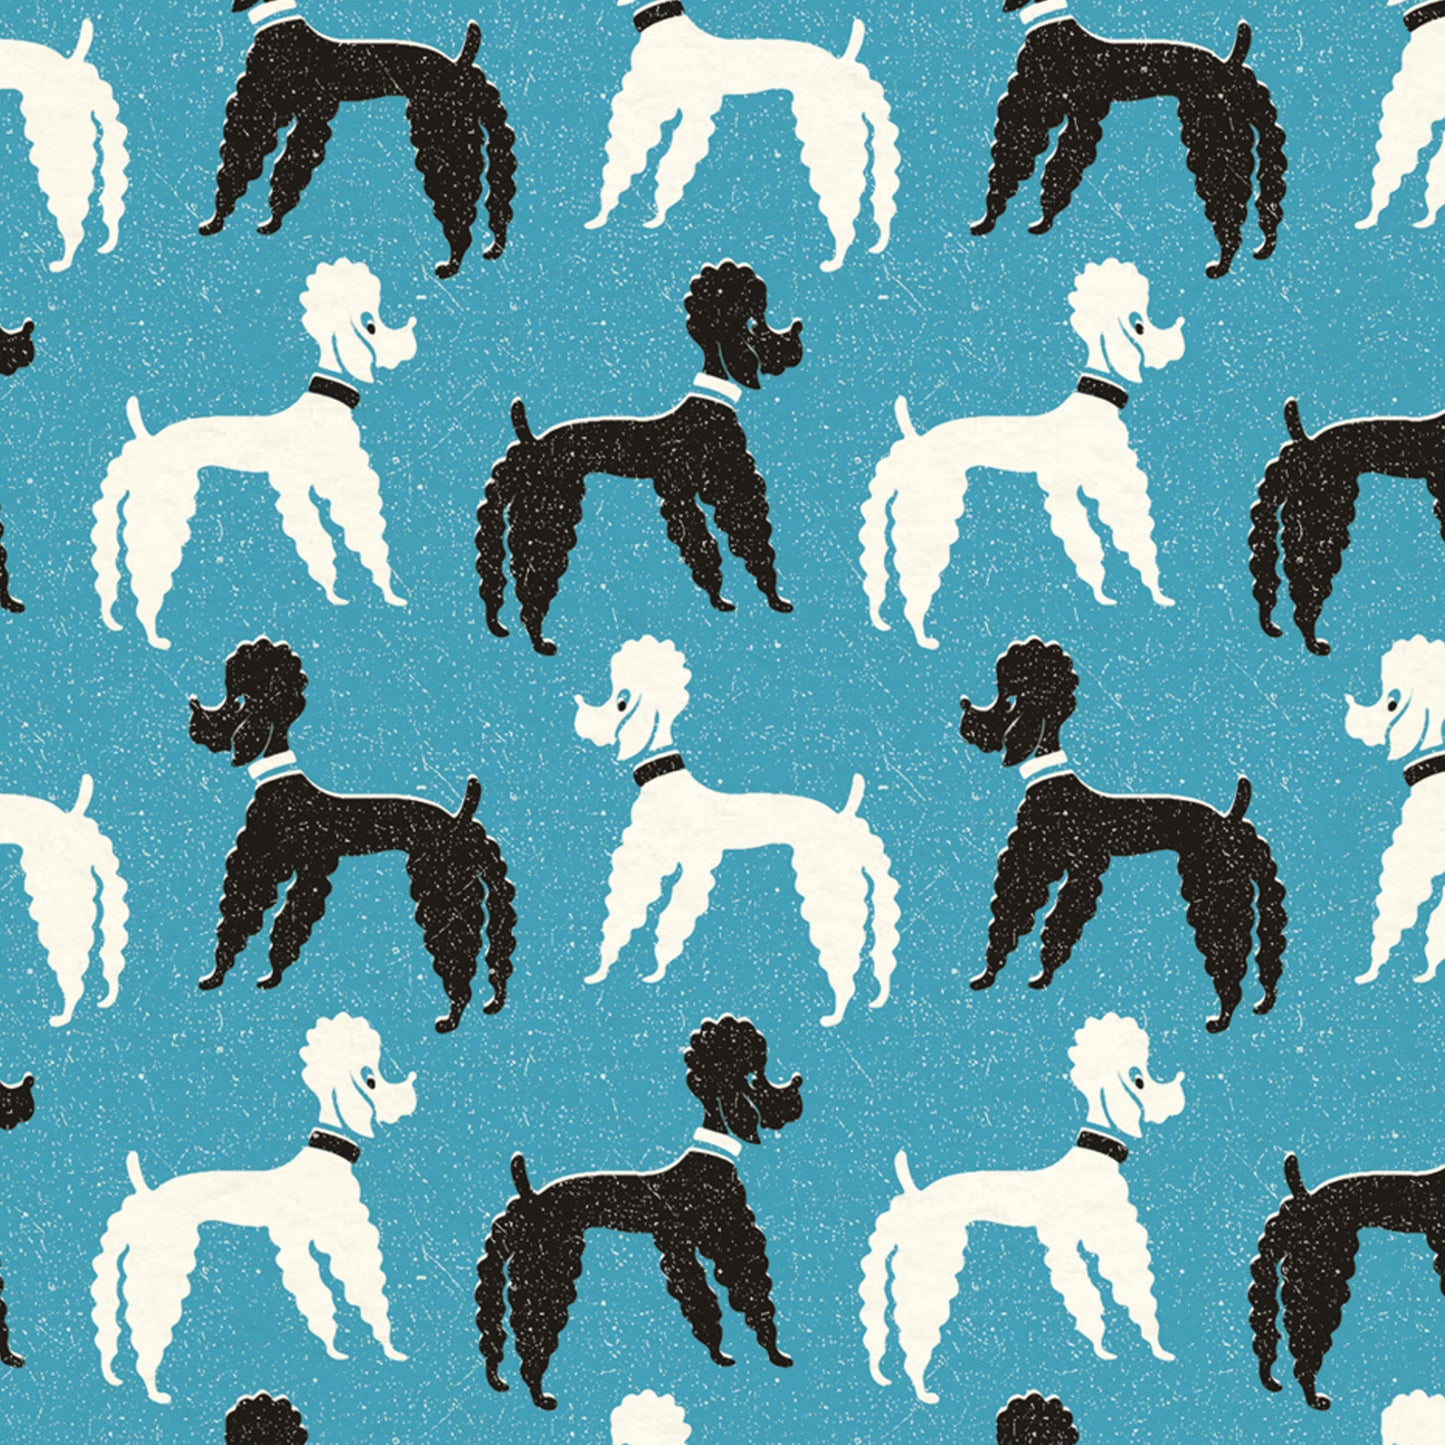 Just Patterns: Poodles, Blue